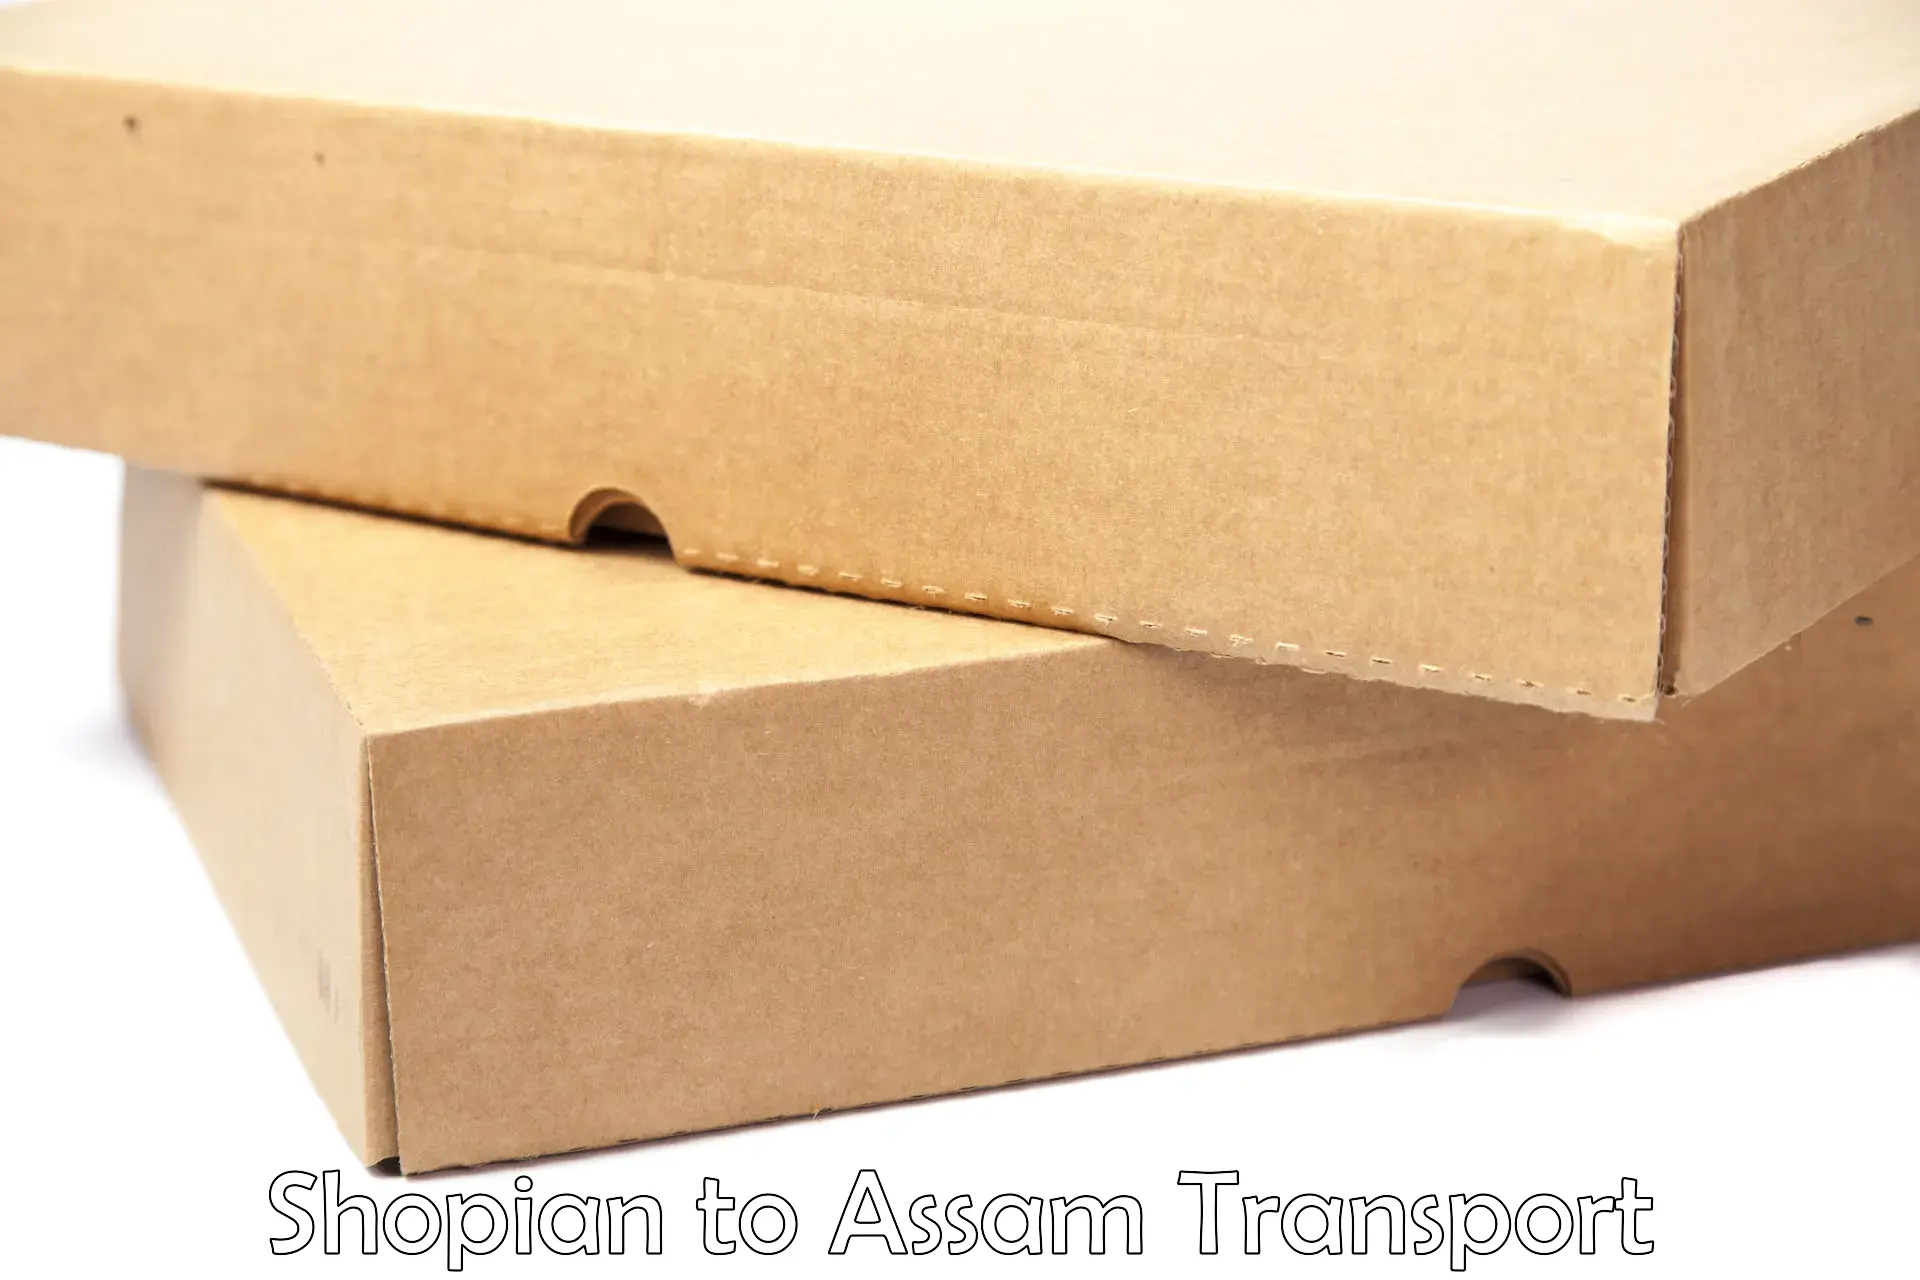 Daily transport service Shopian to Assam